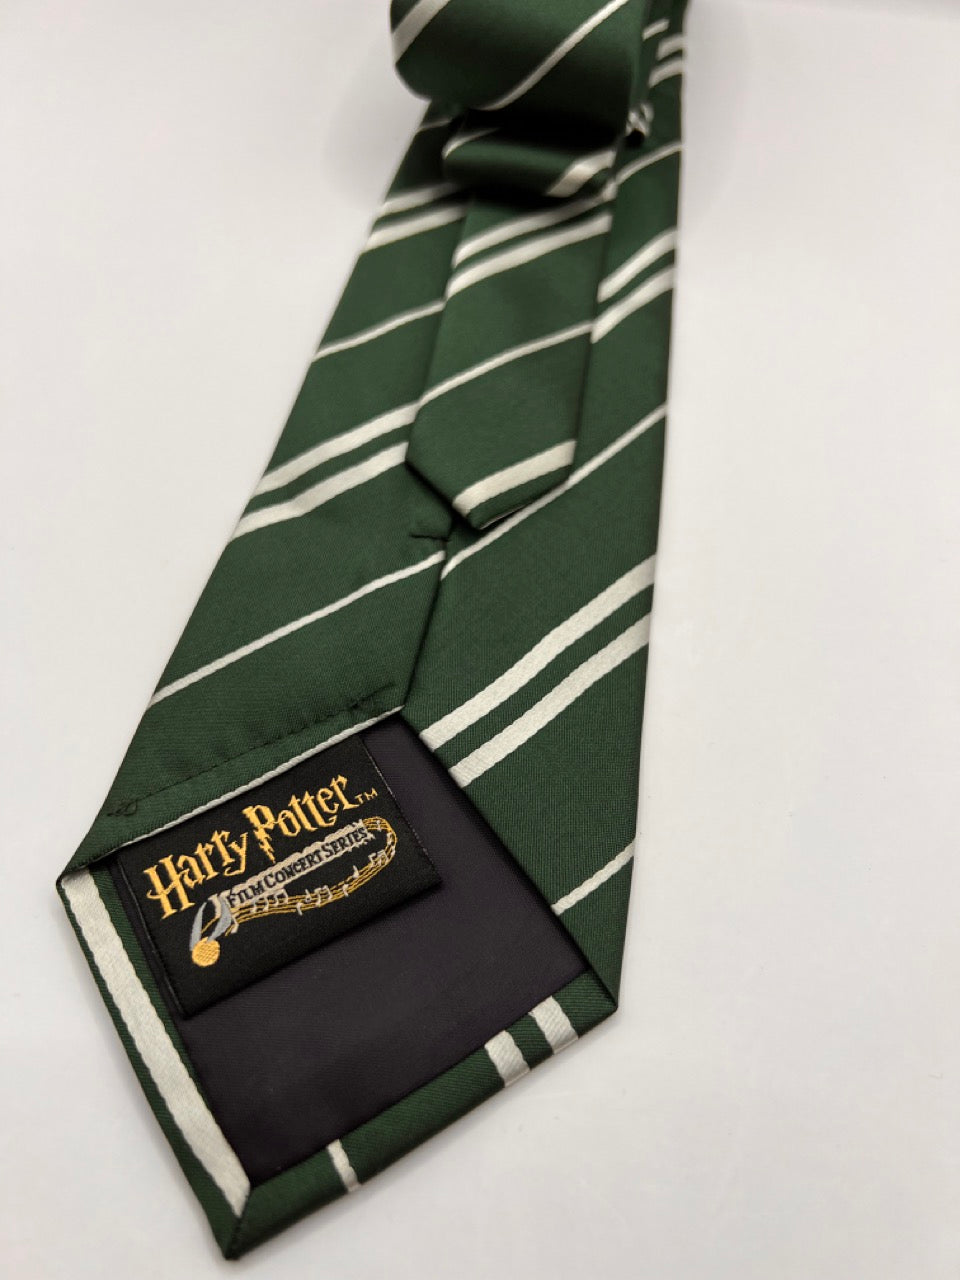 Wholesale Set of 4 pieces Harry Potter Ties